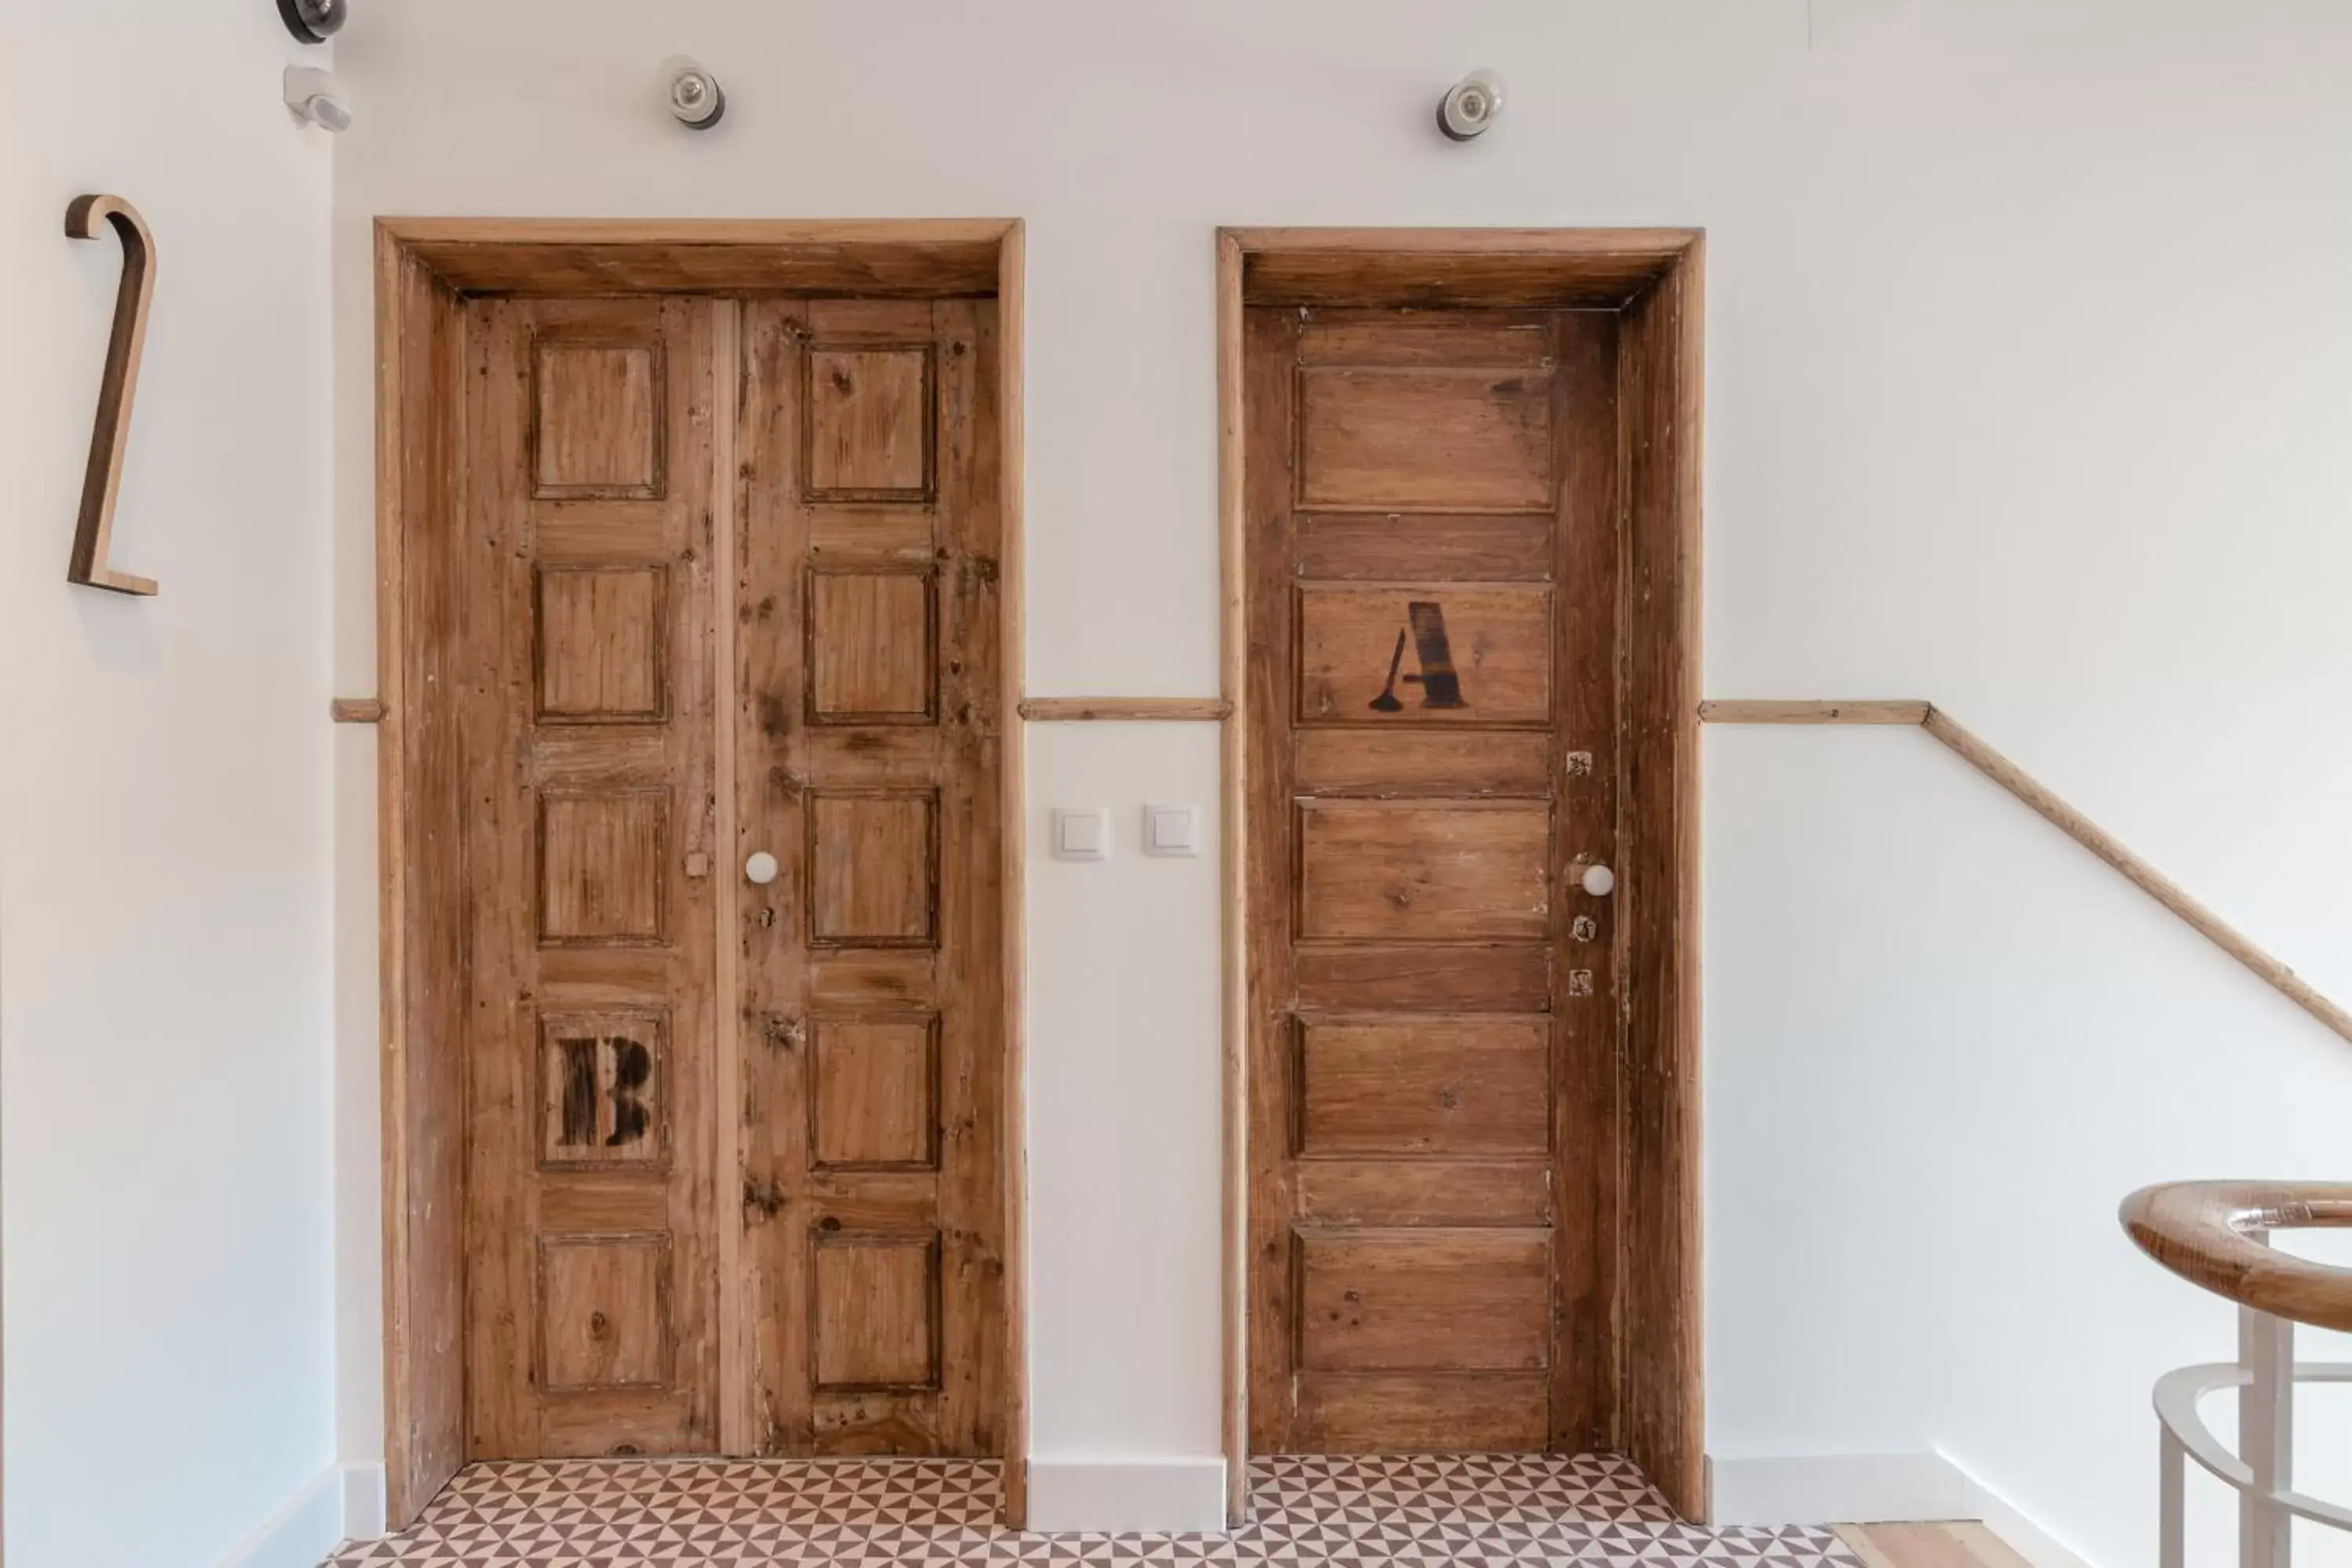 Decorative detail, Facade/Entrance in Chiado Arty Flats